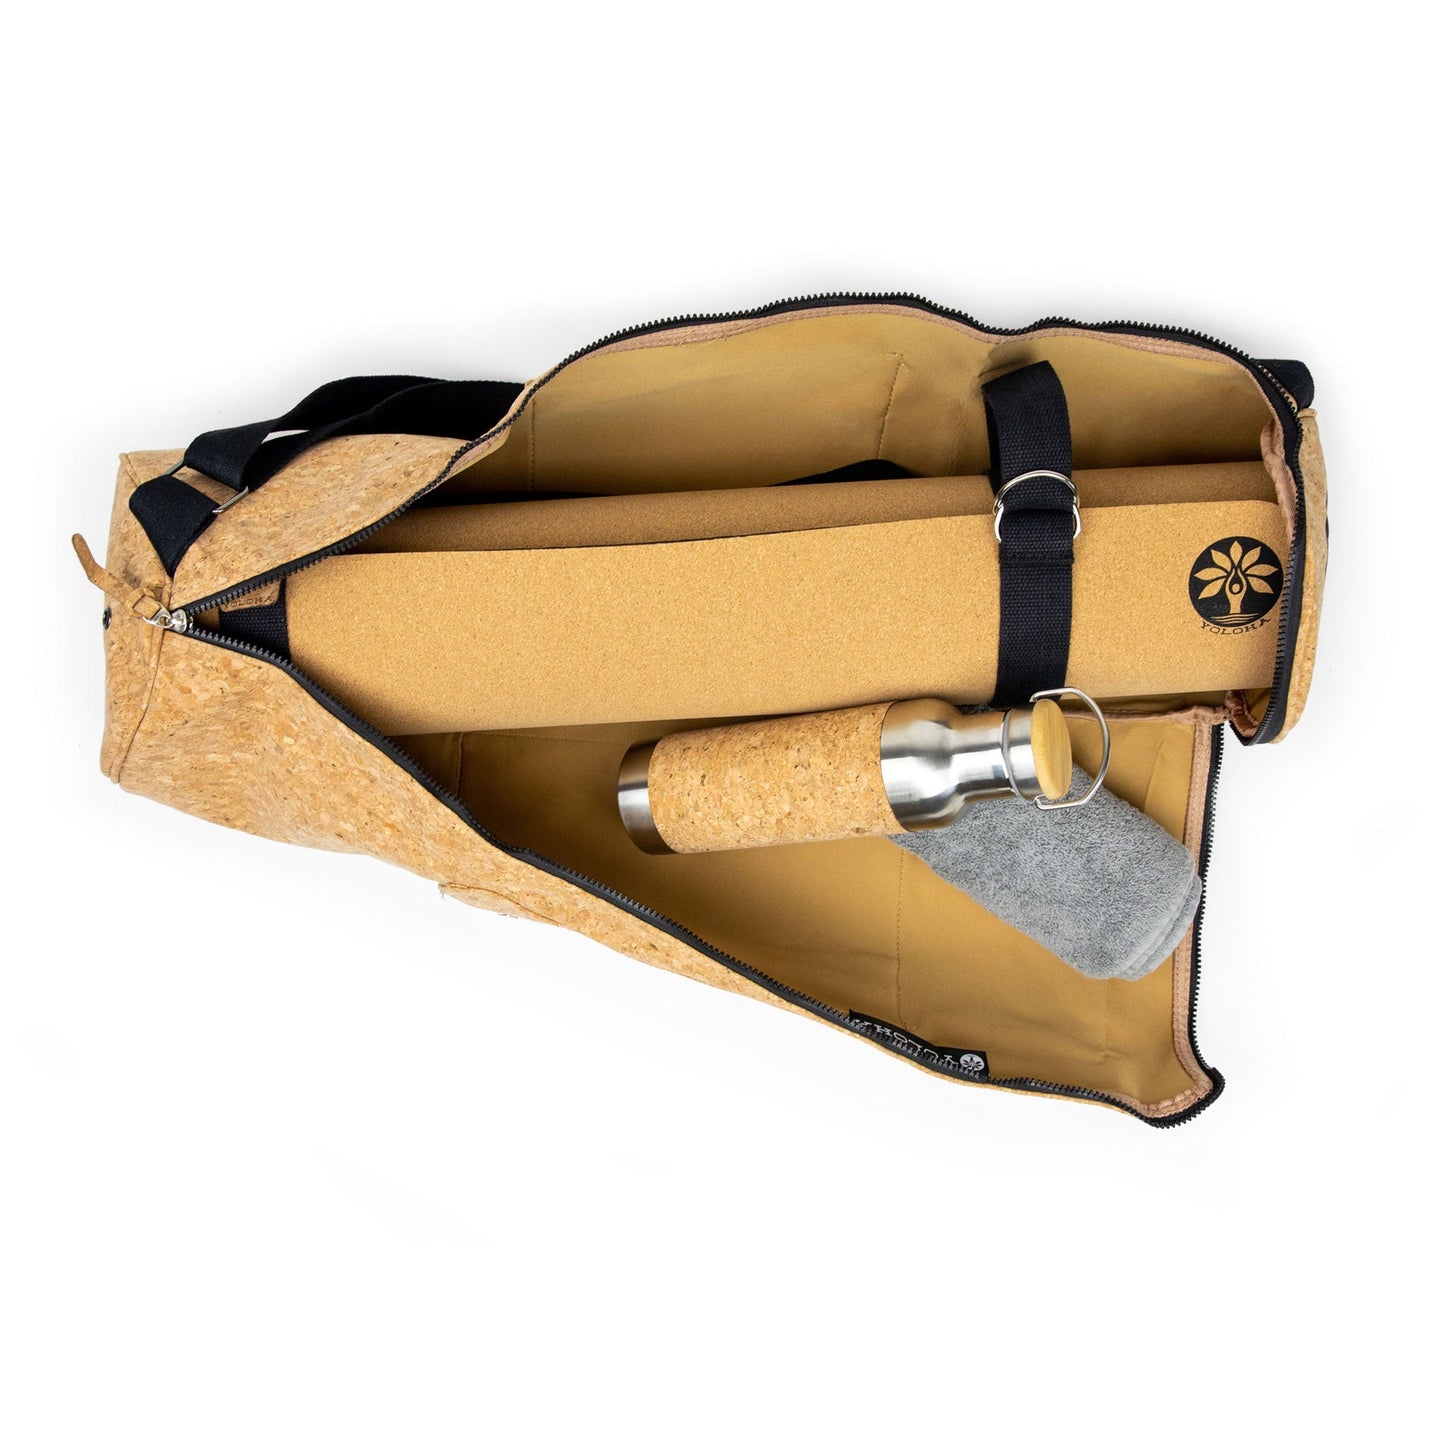 Cork Yoga Mat Bag - Echo Market